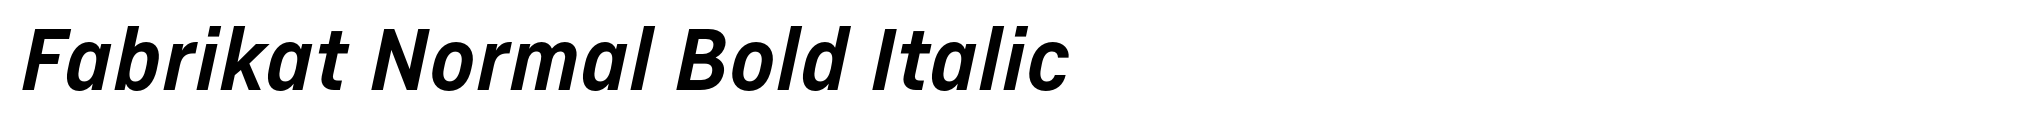 Fabrikat Normal Bold Italic image